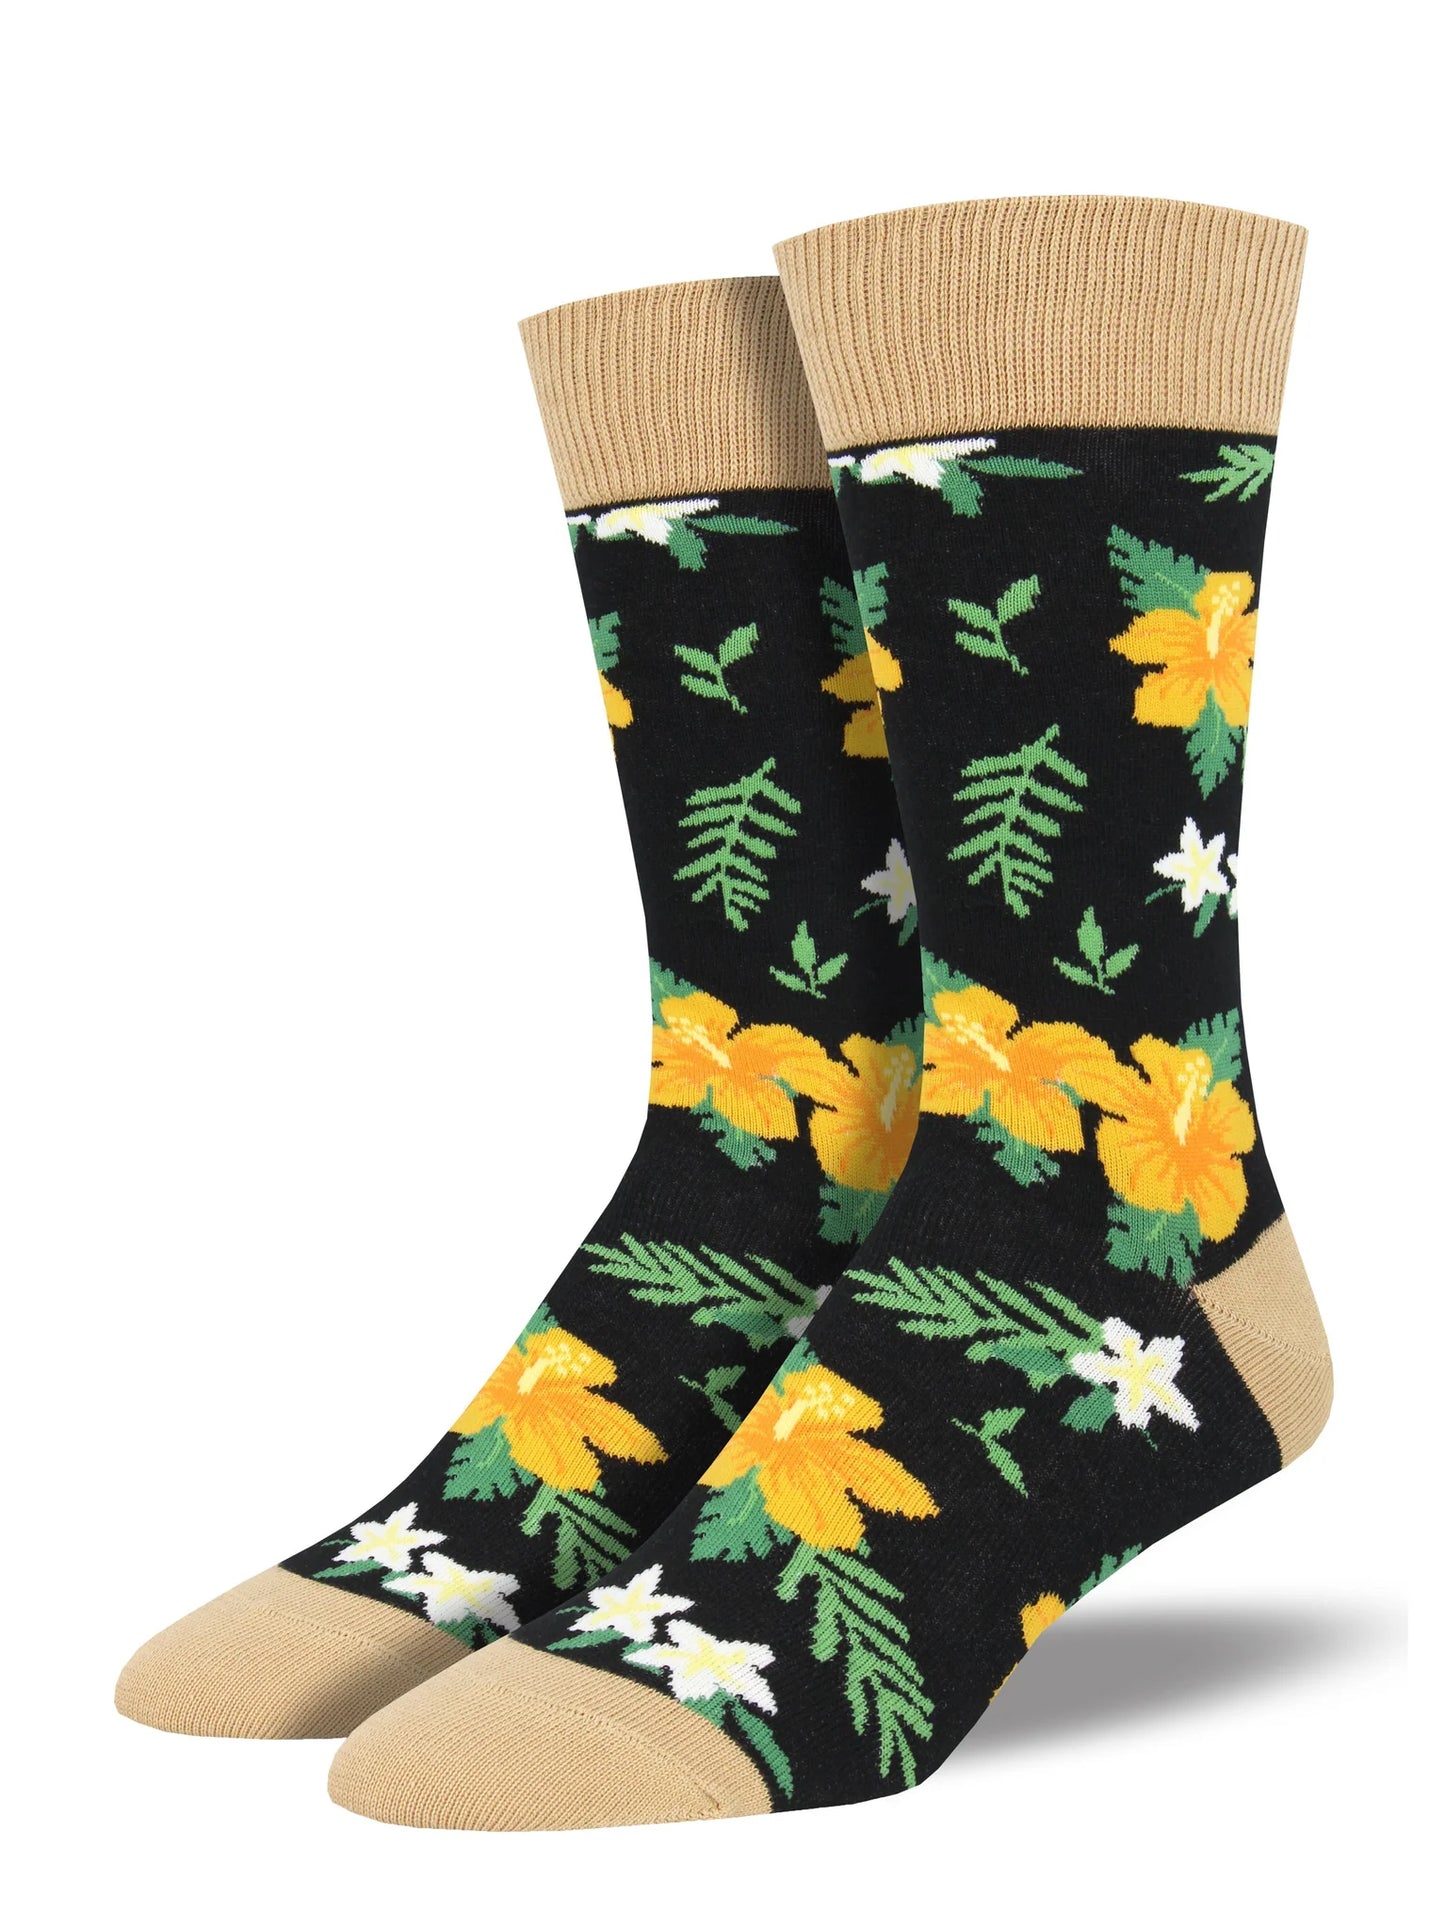 Men's Socks | Aloha Floral Yellow